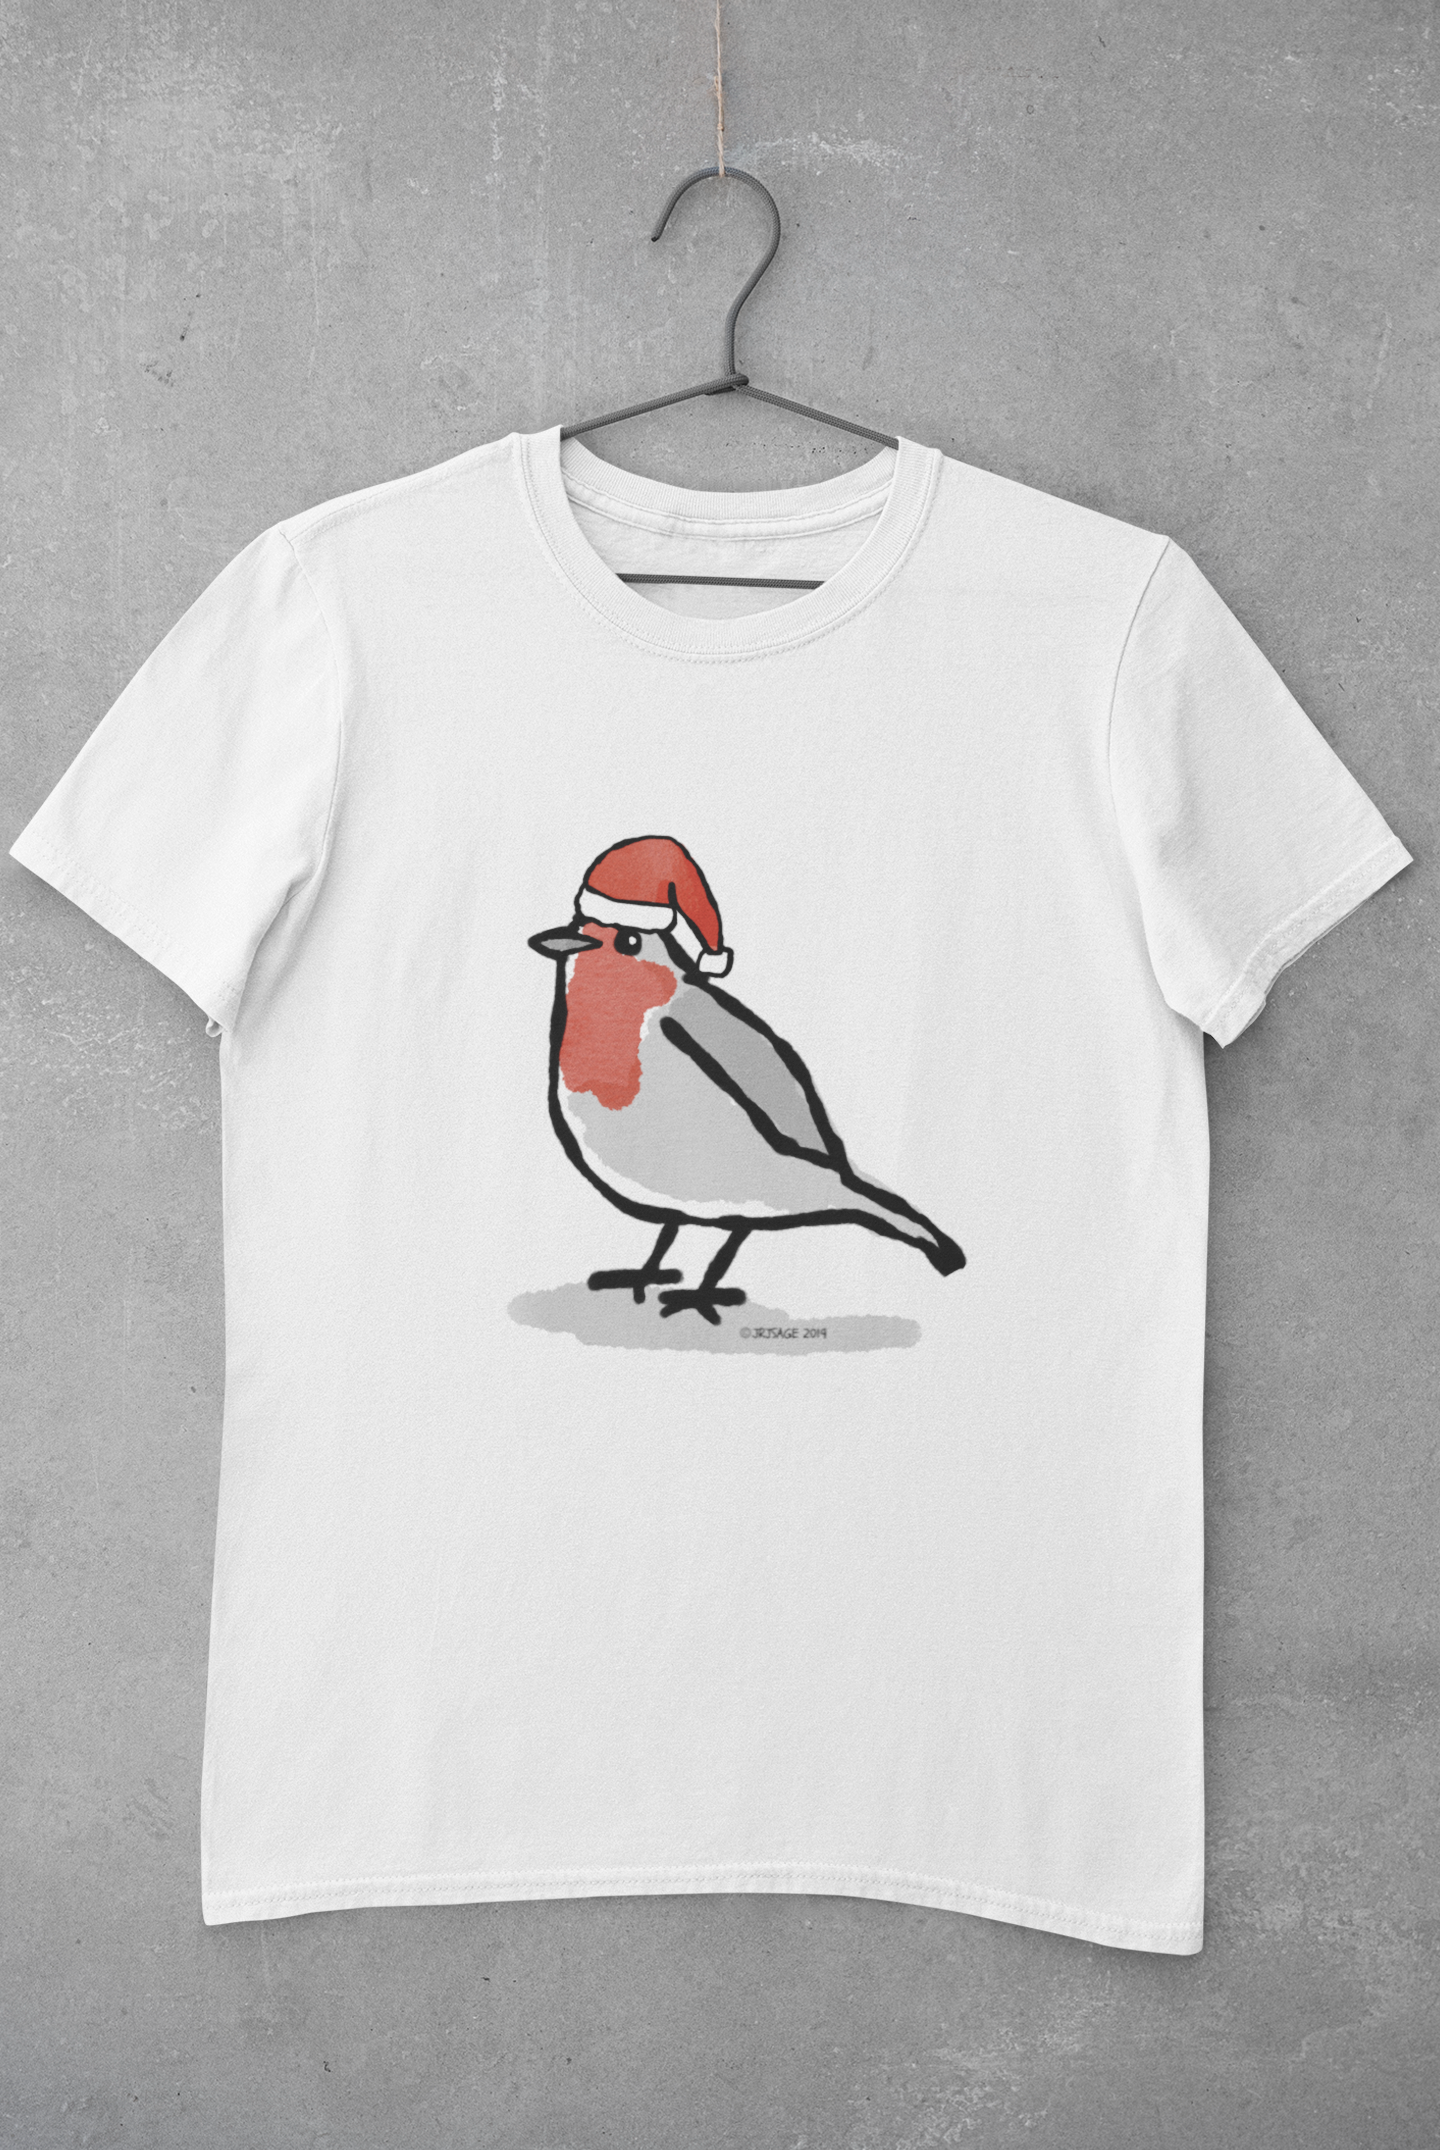 Santa Robin Christmas T-shirt - Original illustrated Robin design by Hector and Bone - Christmas Robin t-shirts - Vegan cotton white t-shirt